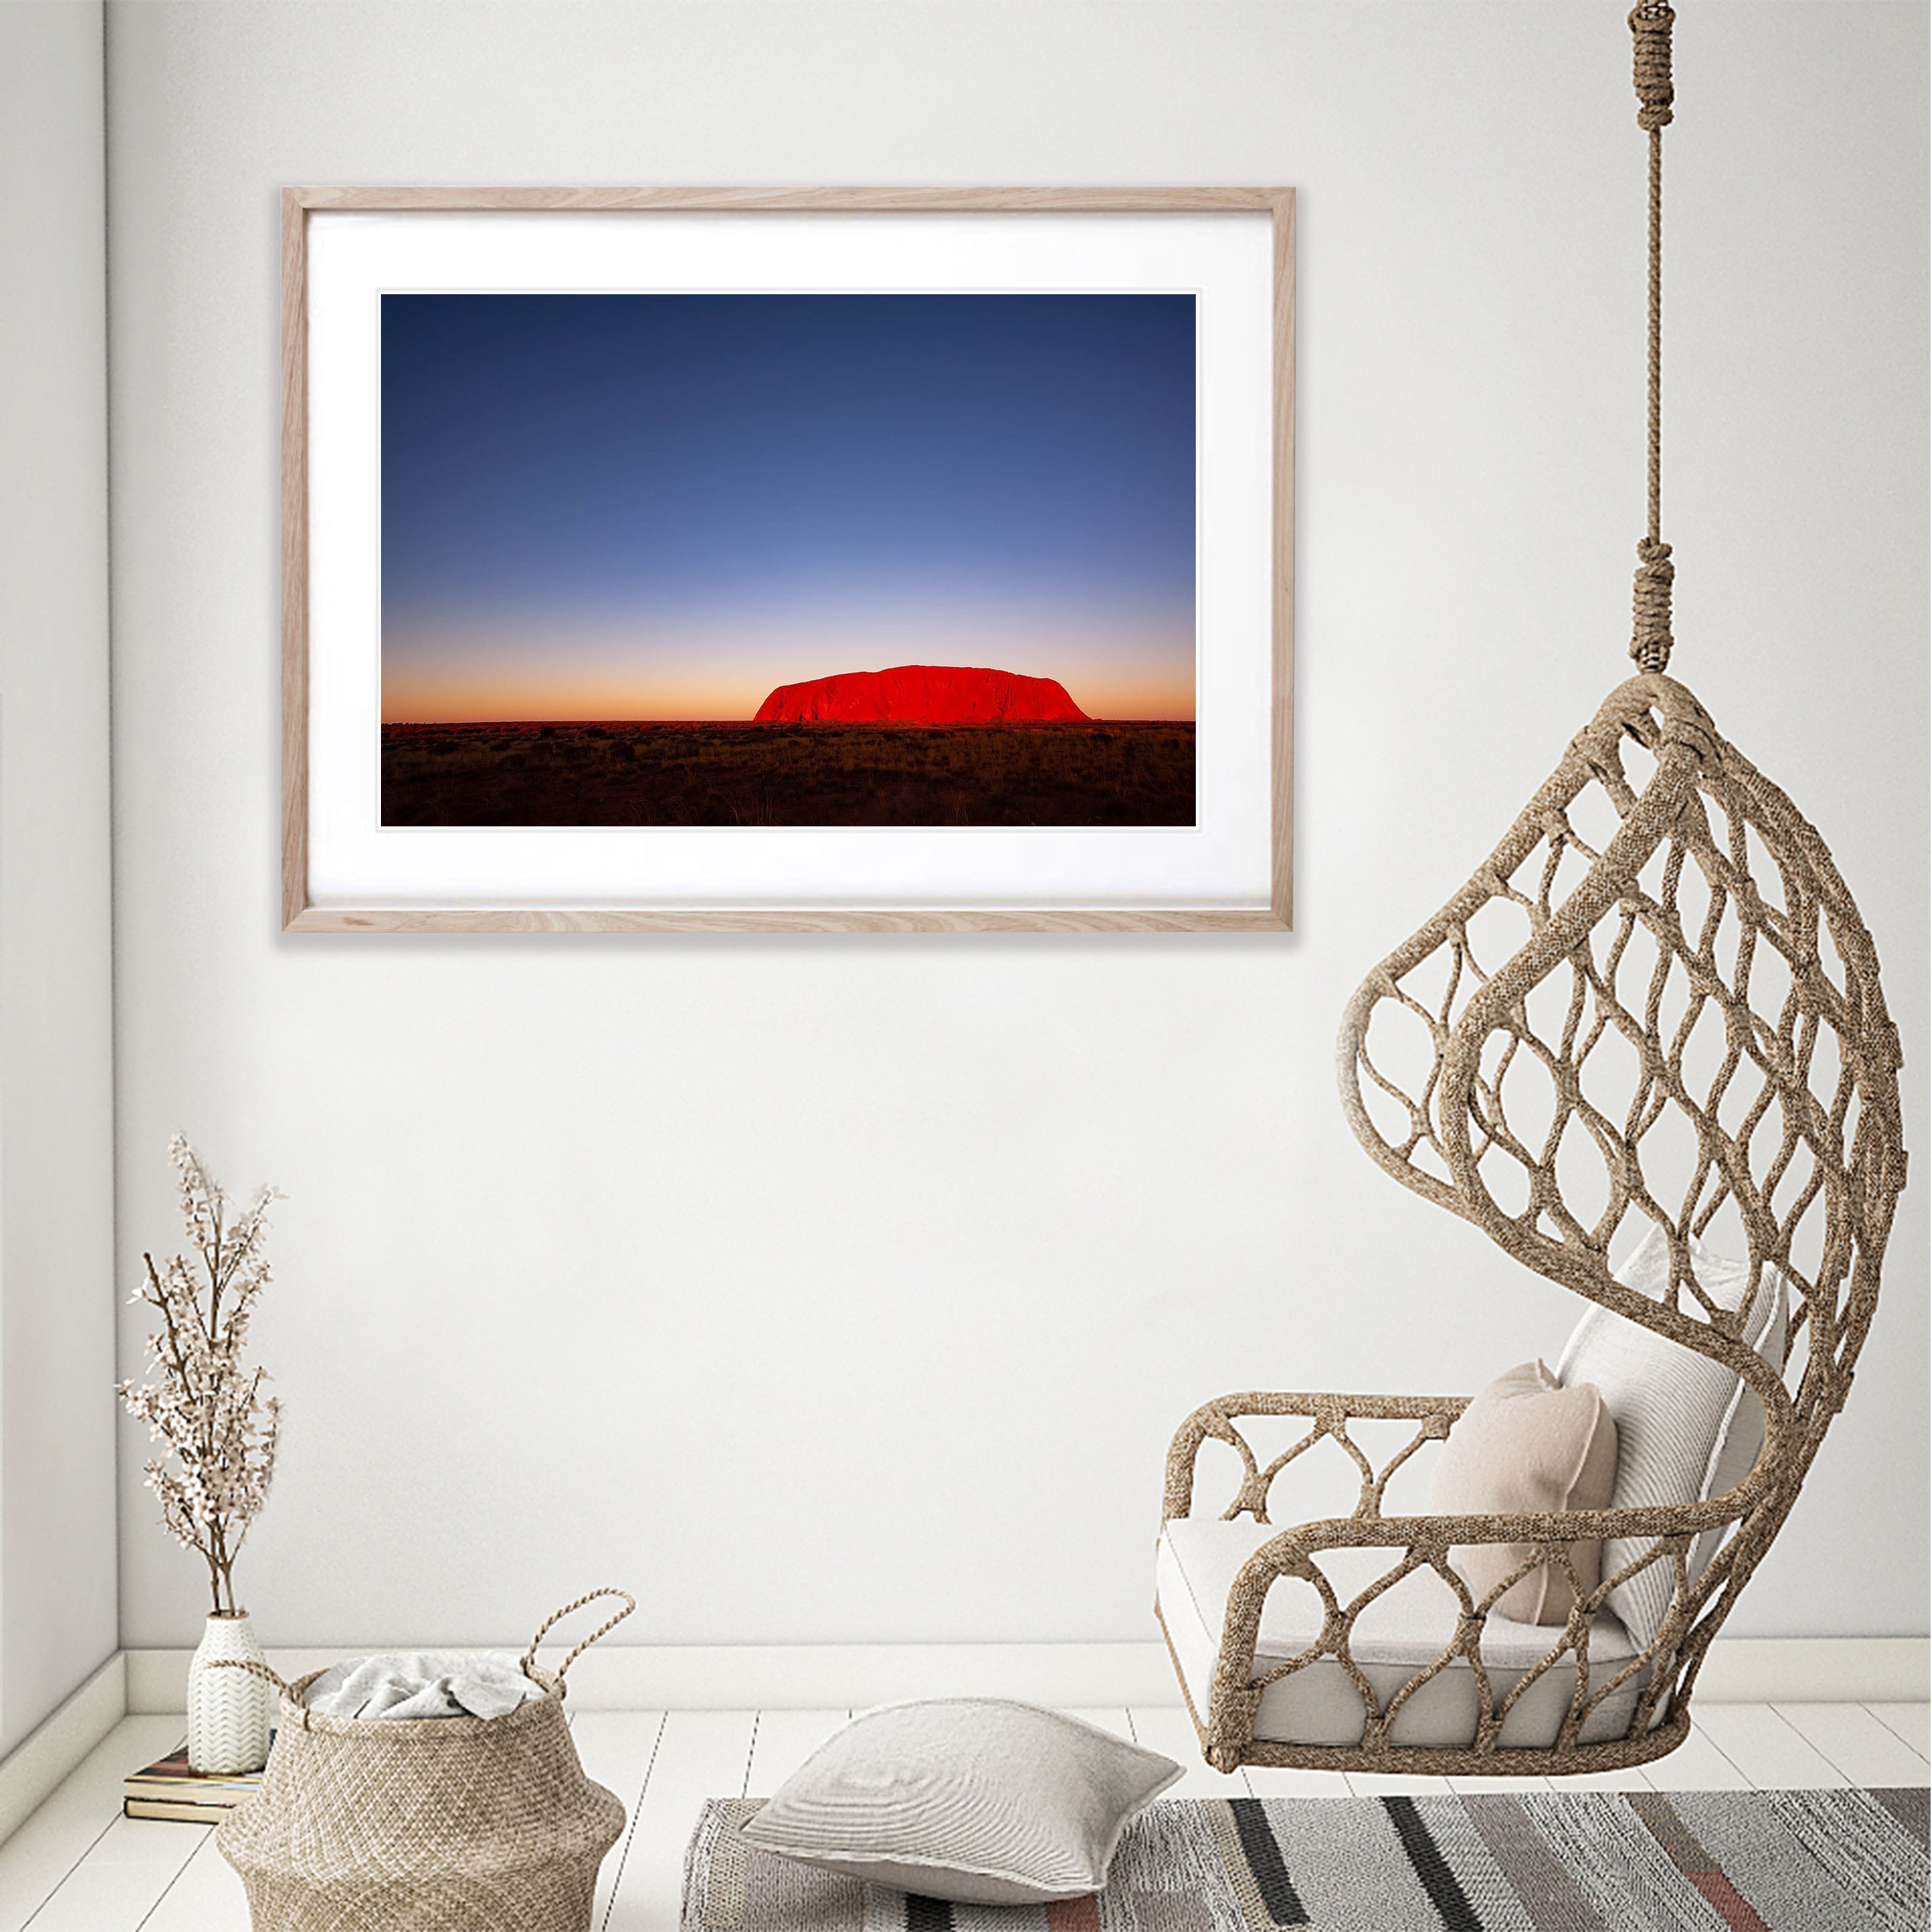 Uluru Sunset Glow #2, Central Australia